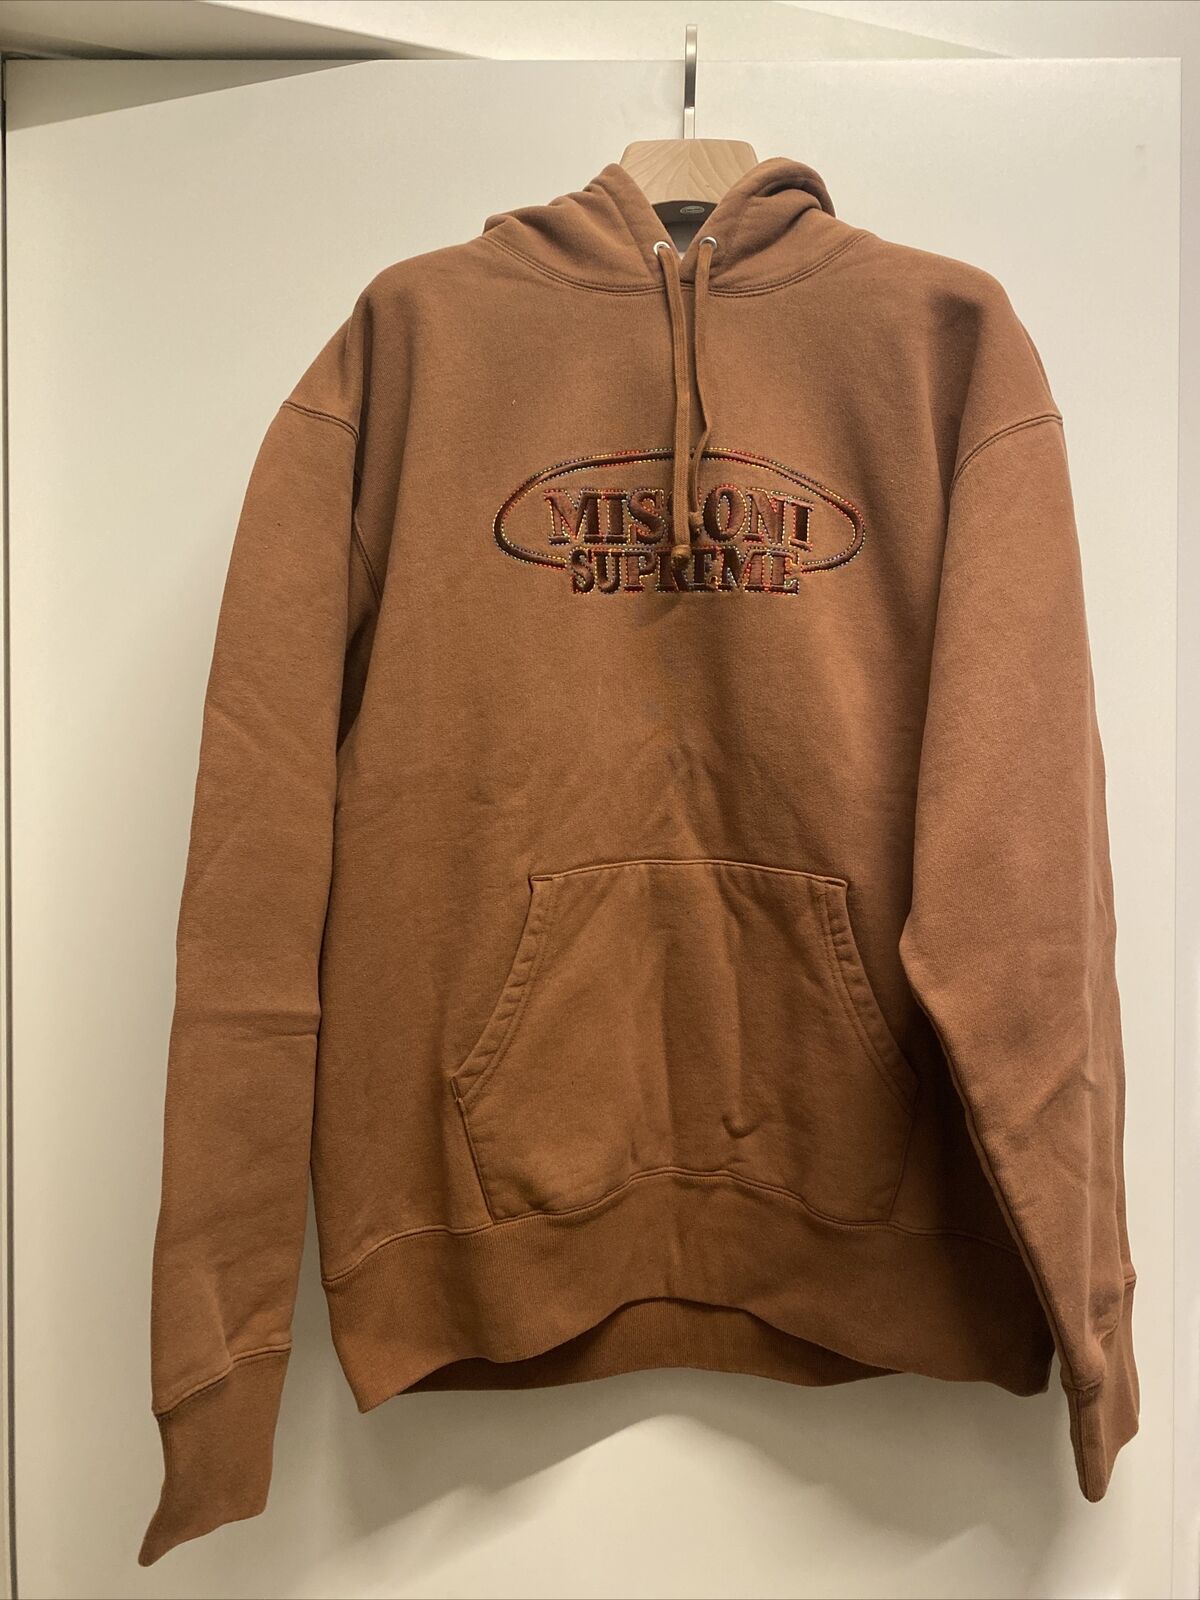 Supreme x Missoni Hooded Brown Sweatshirt Size Large